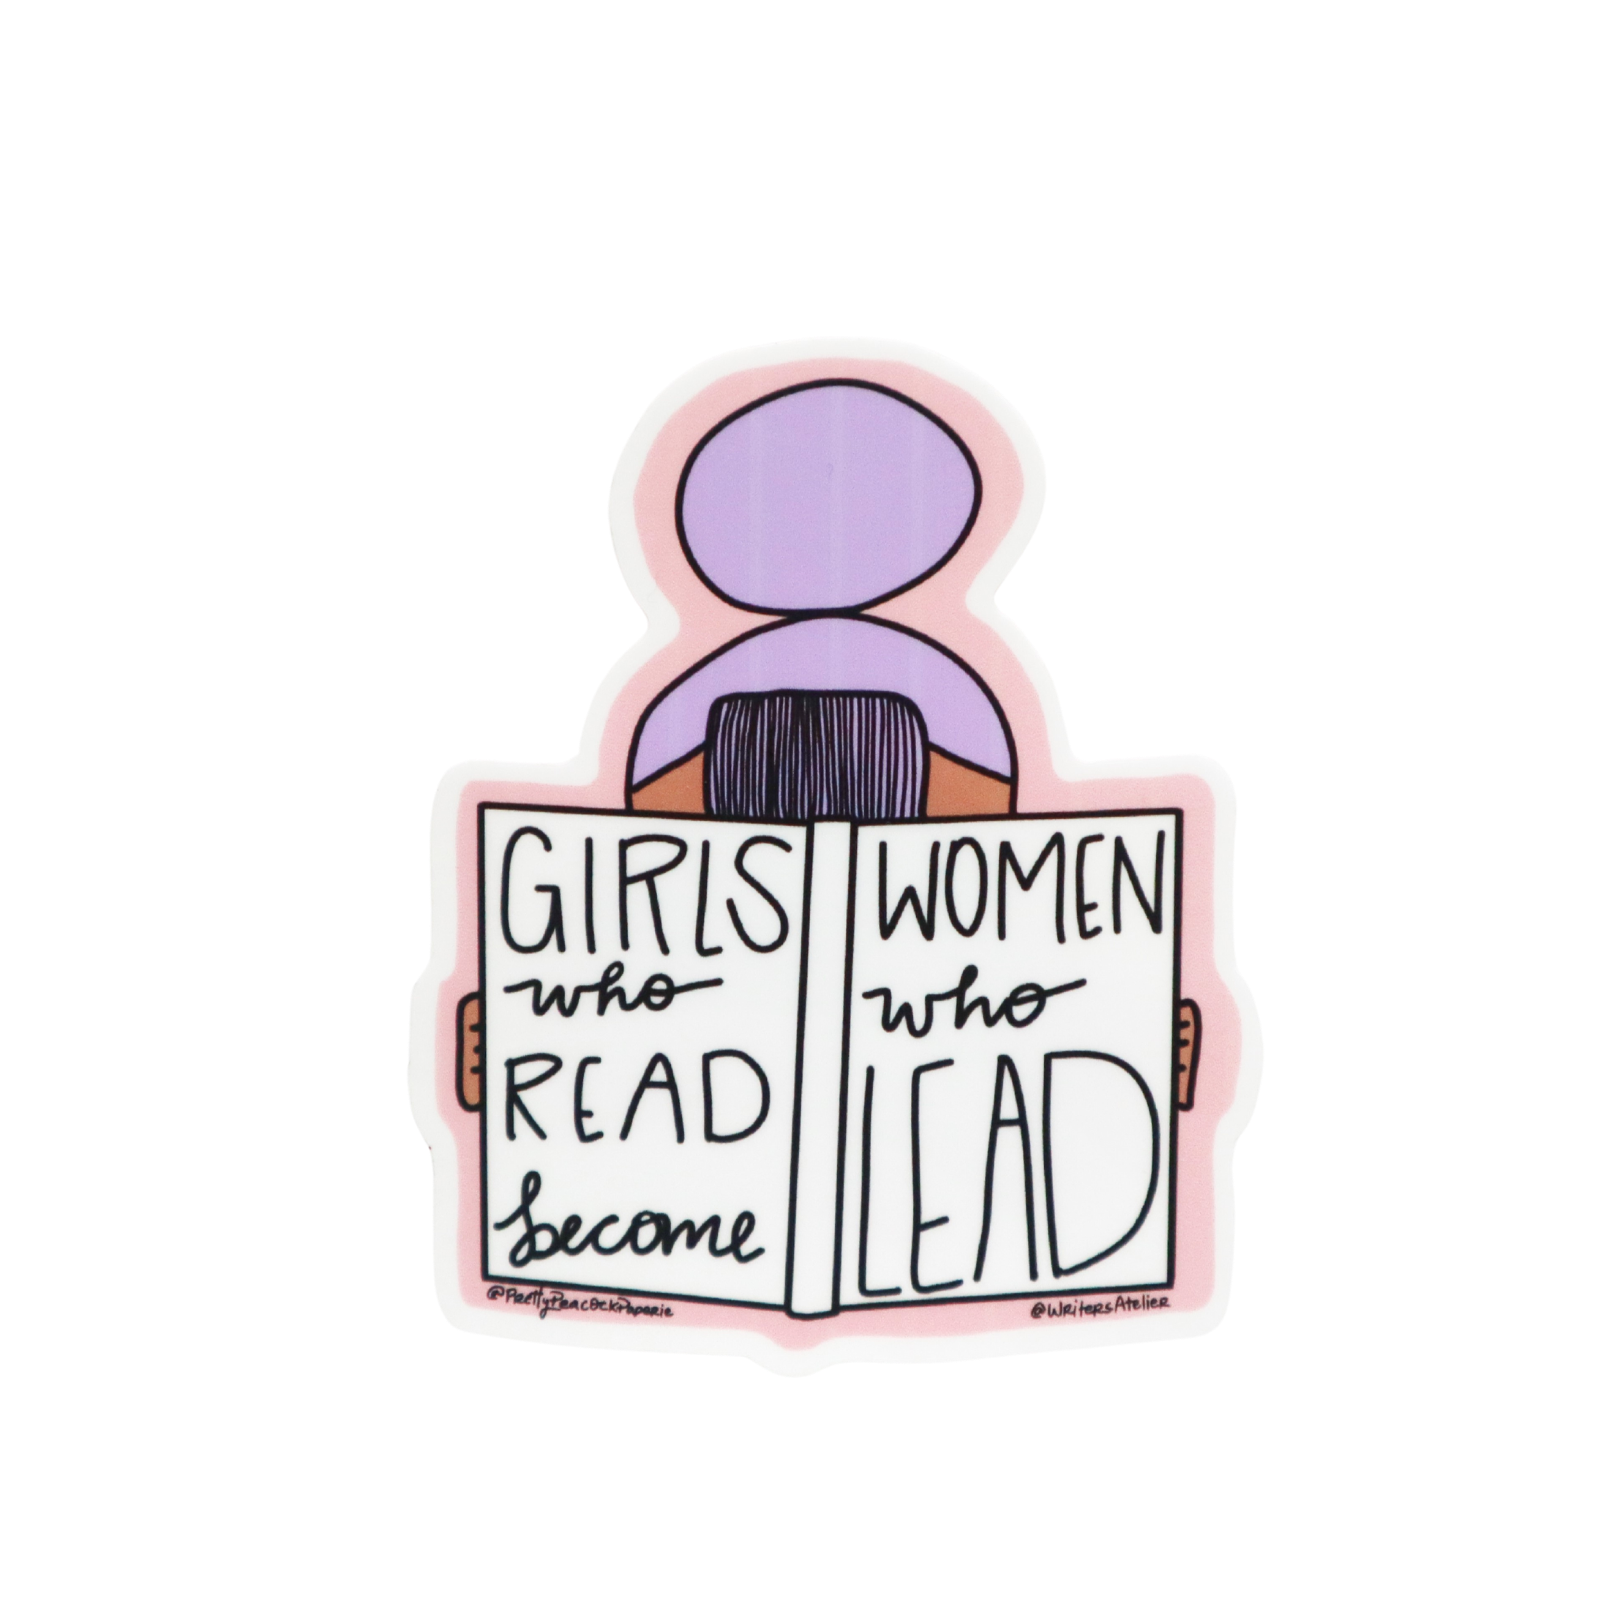 Little Girls Who Read Become Women Who Lead Sticker